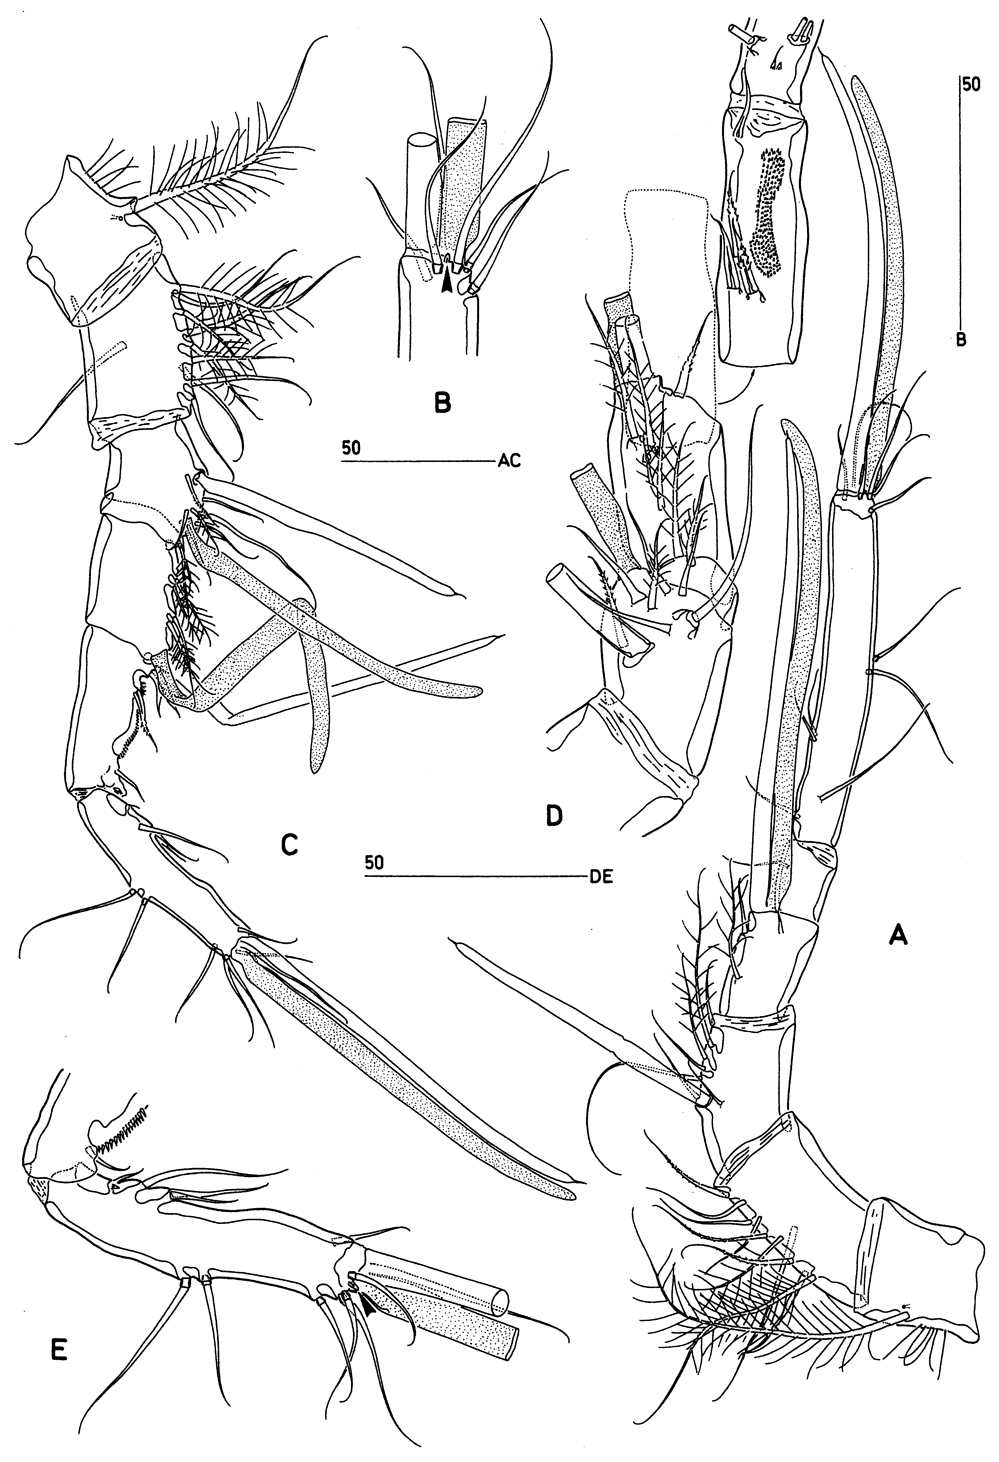 Species Goniopsyllus clausi - Plate 2 of morphological figures